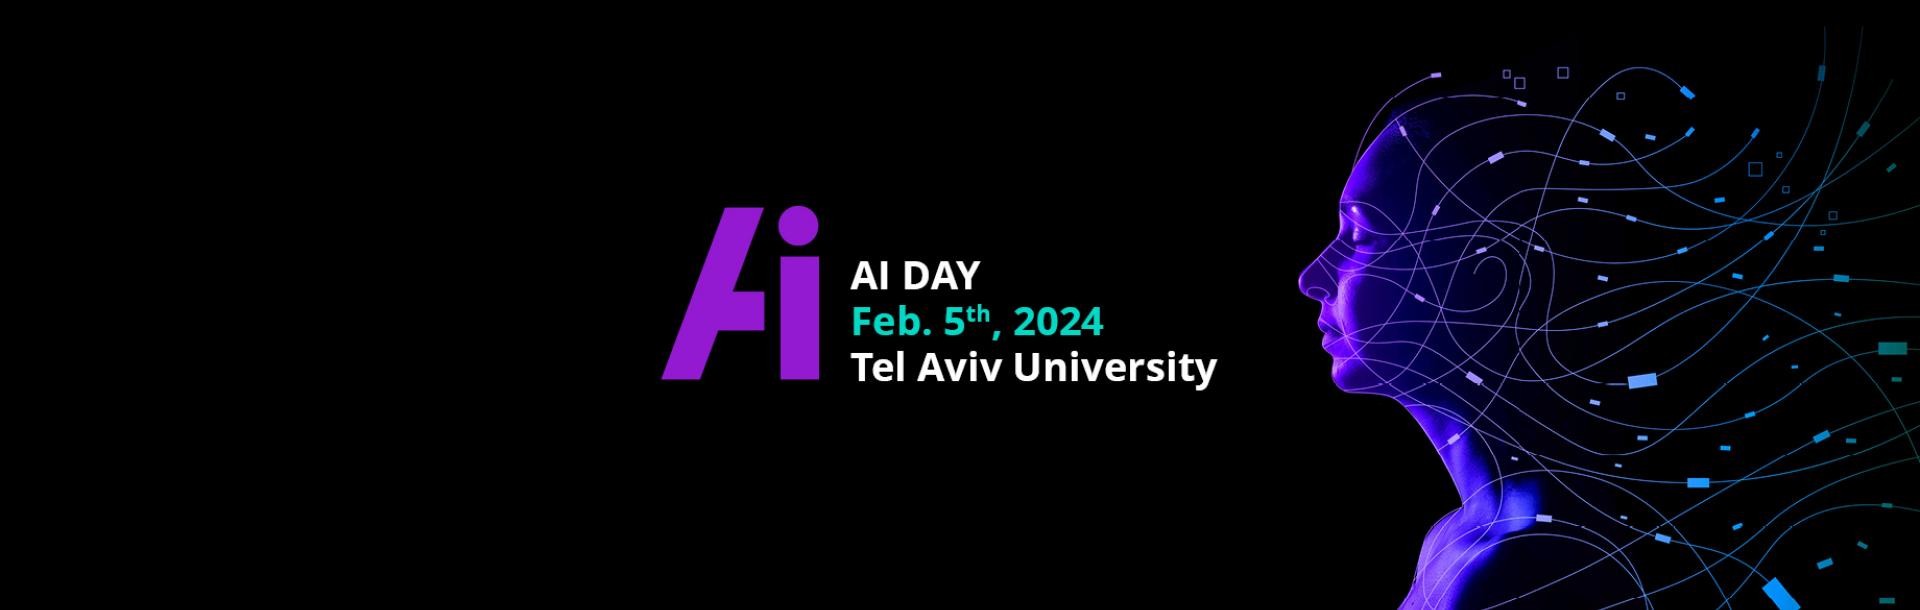 AI DAY 2024